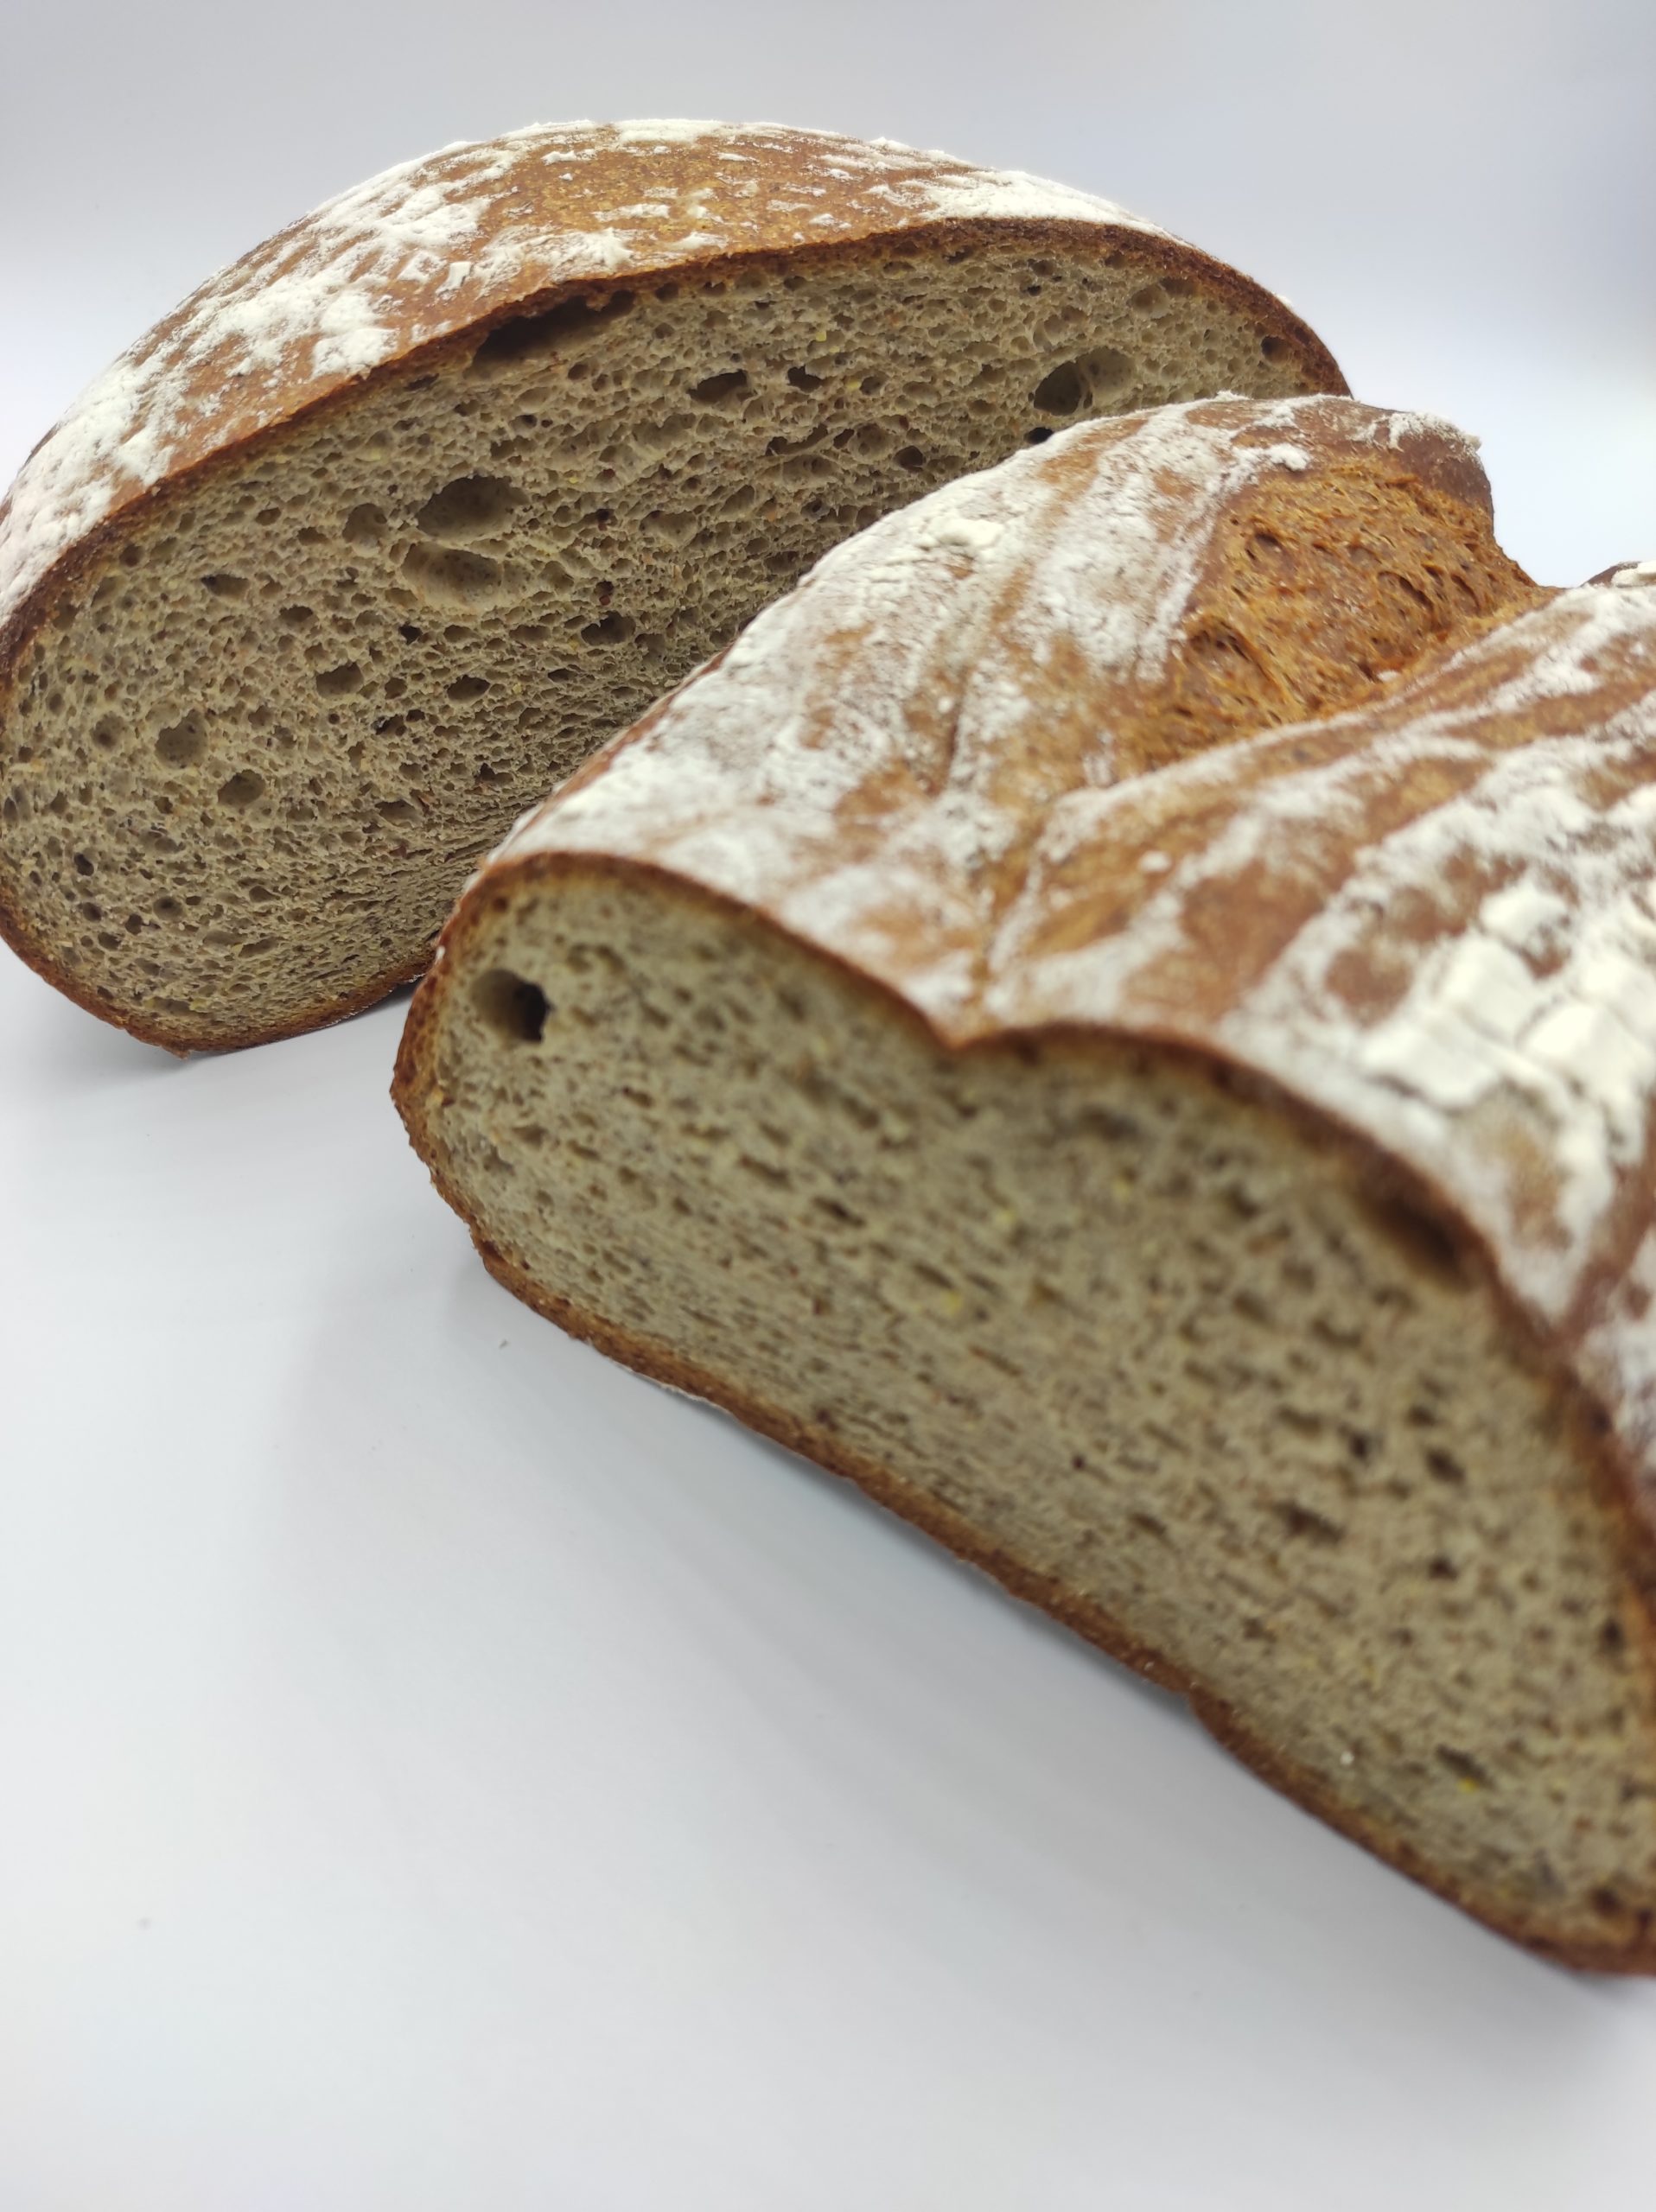 bakery bread pastry indespan bake gluten free catering sourdough fiber